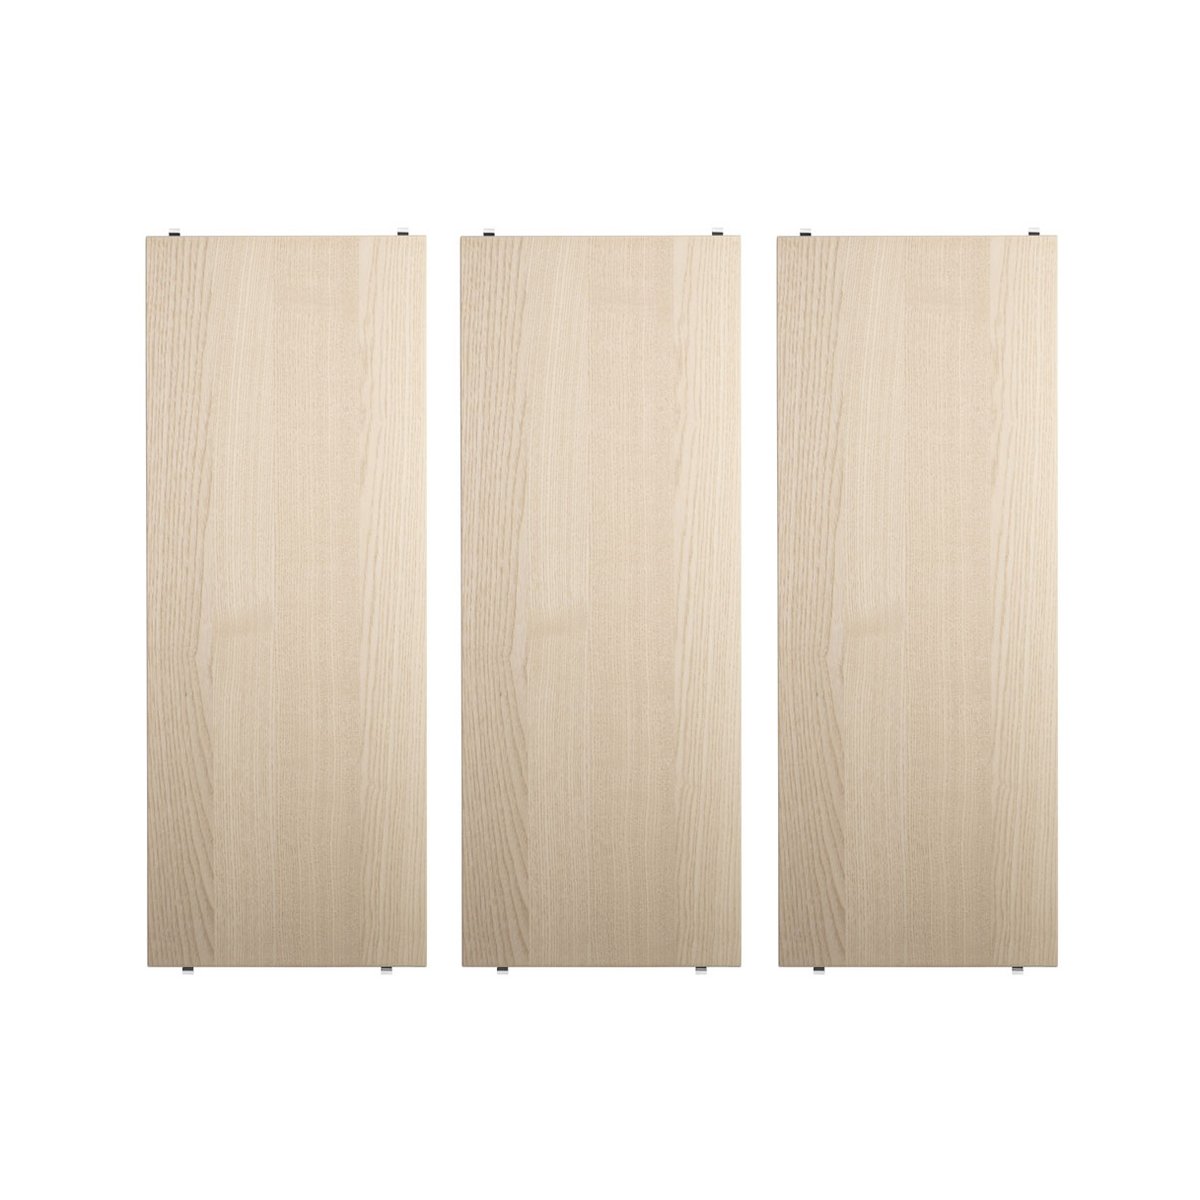 String String plank essenhout, 78x30 cm, 3-pack